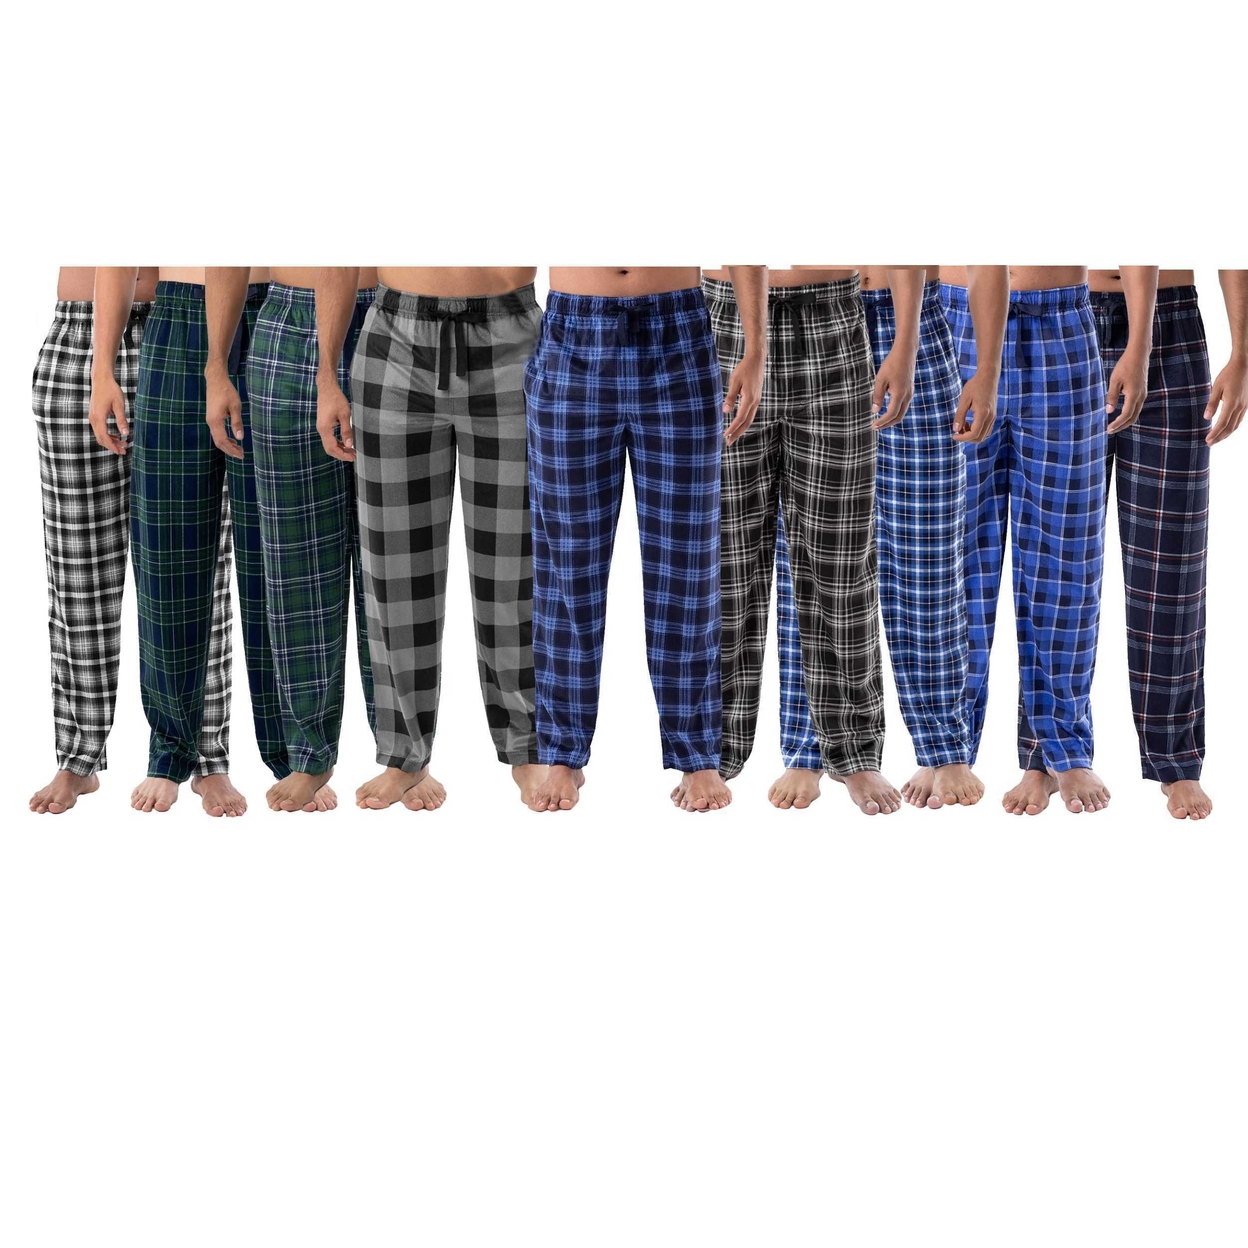 3-Pack: Men's Ultra-Soft Cozy Lounge Sleep Micro Fleece Plaid Pajama Pants - X-large